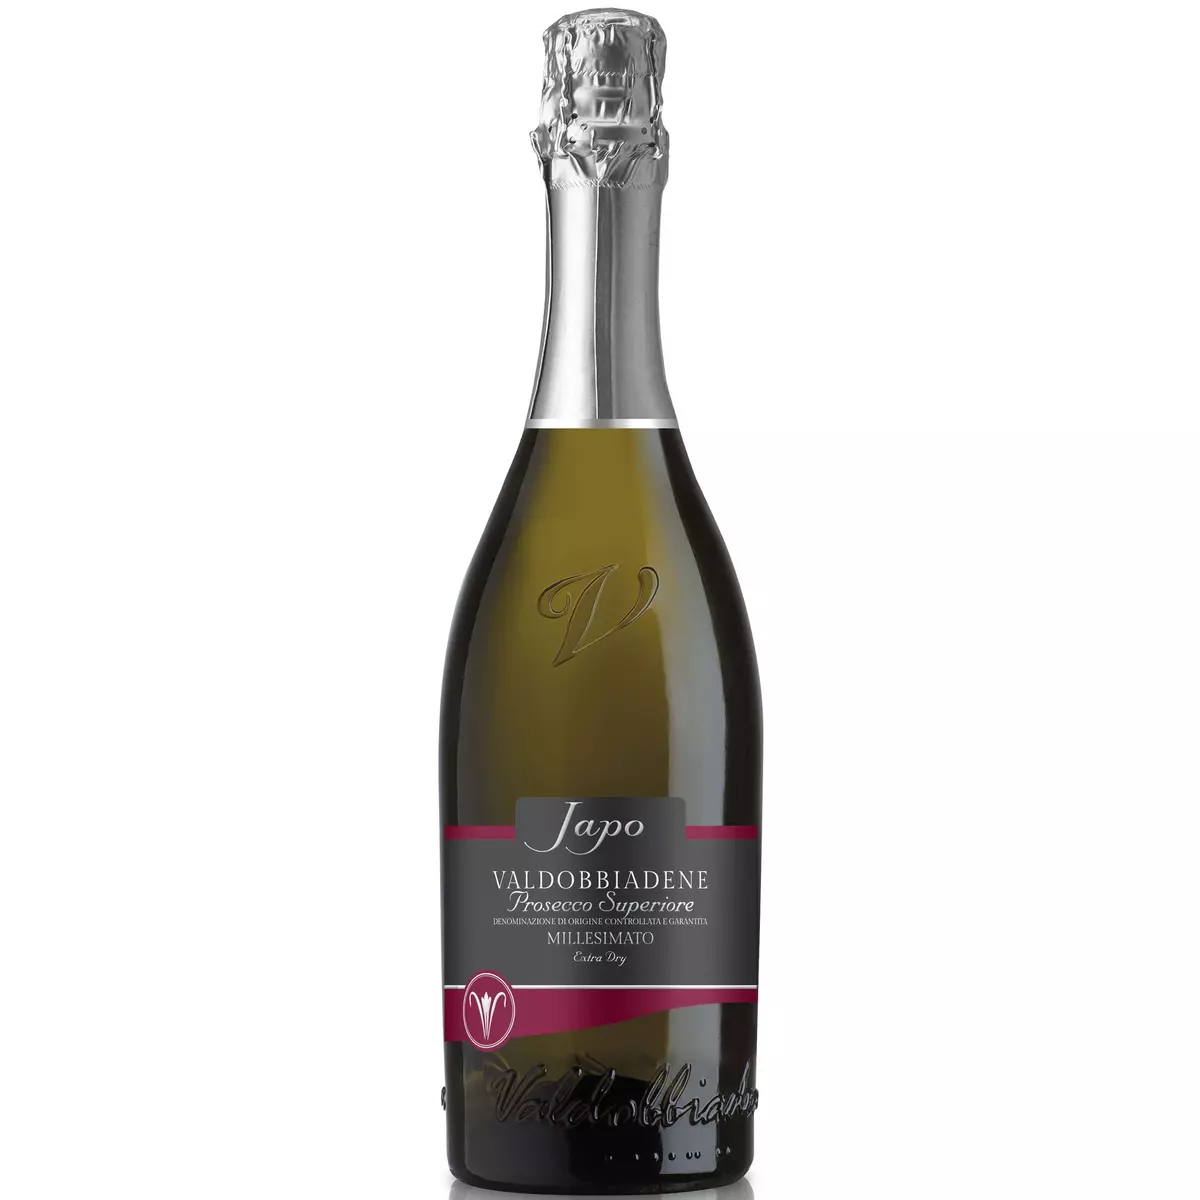 Italie Vin effervescent Valdobbiadene Prosecco supériore extra-dry "Japo" blanc 2019 75cl